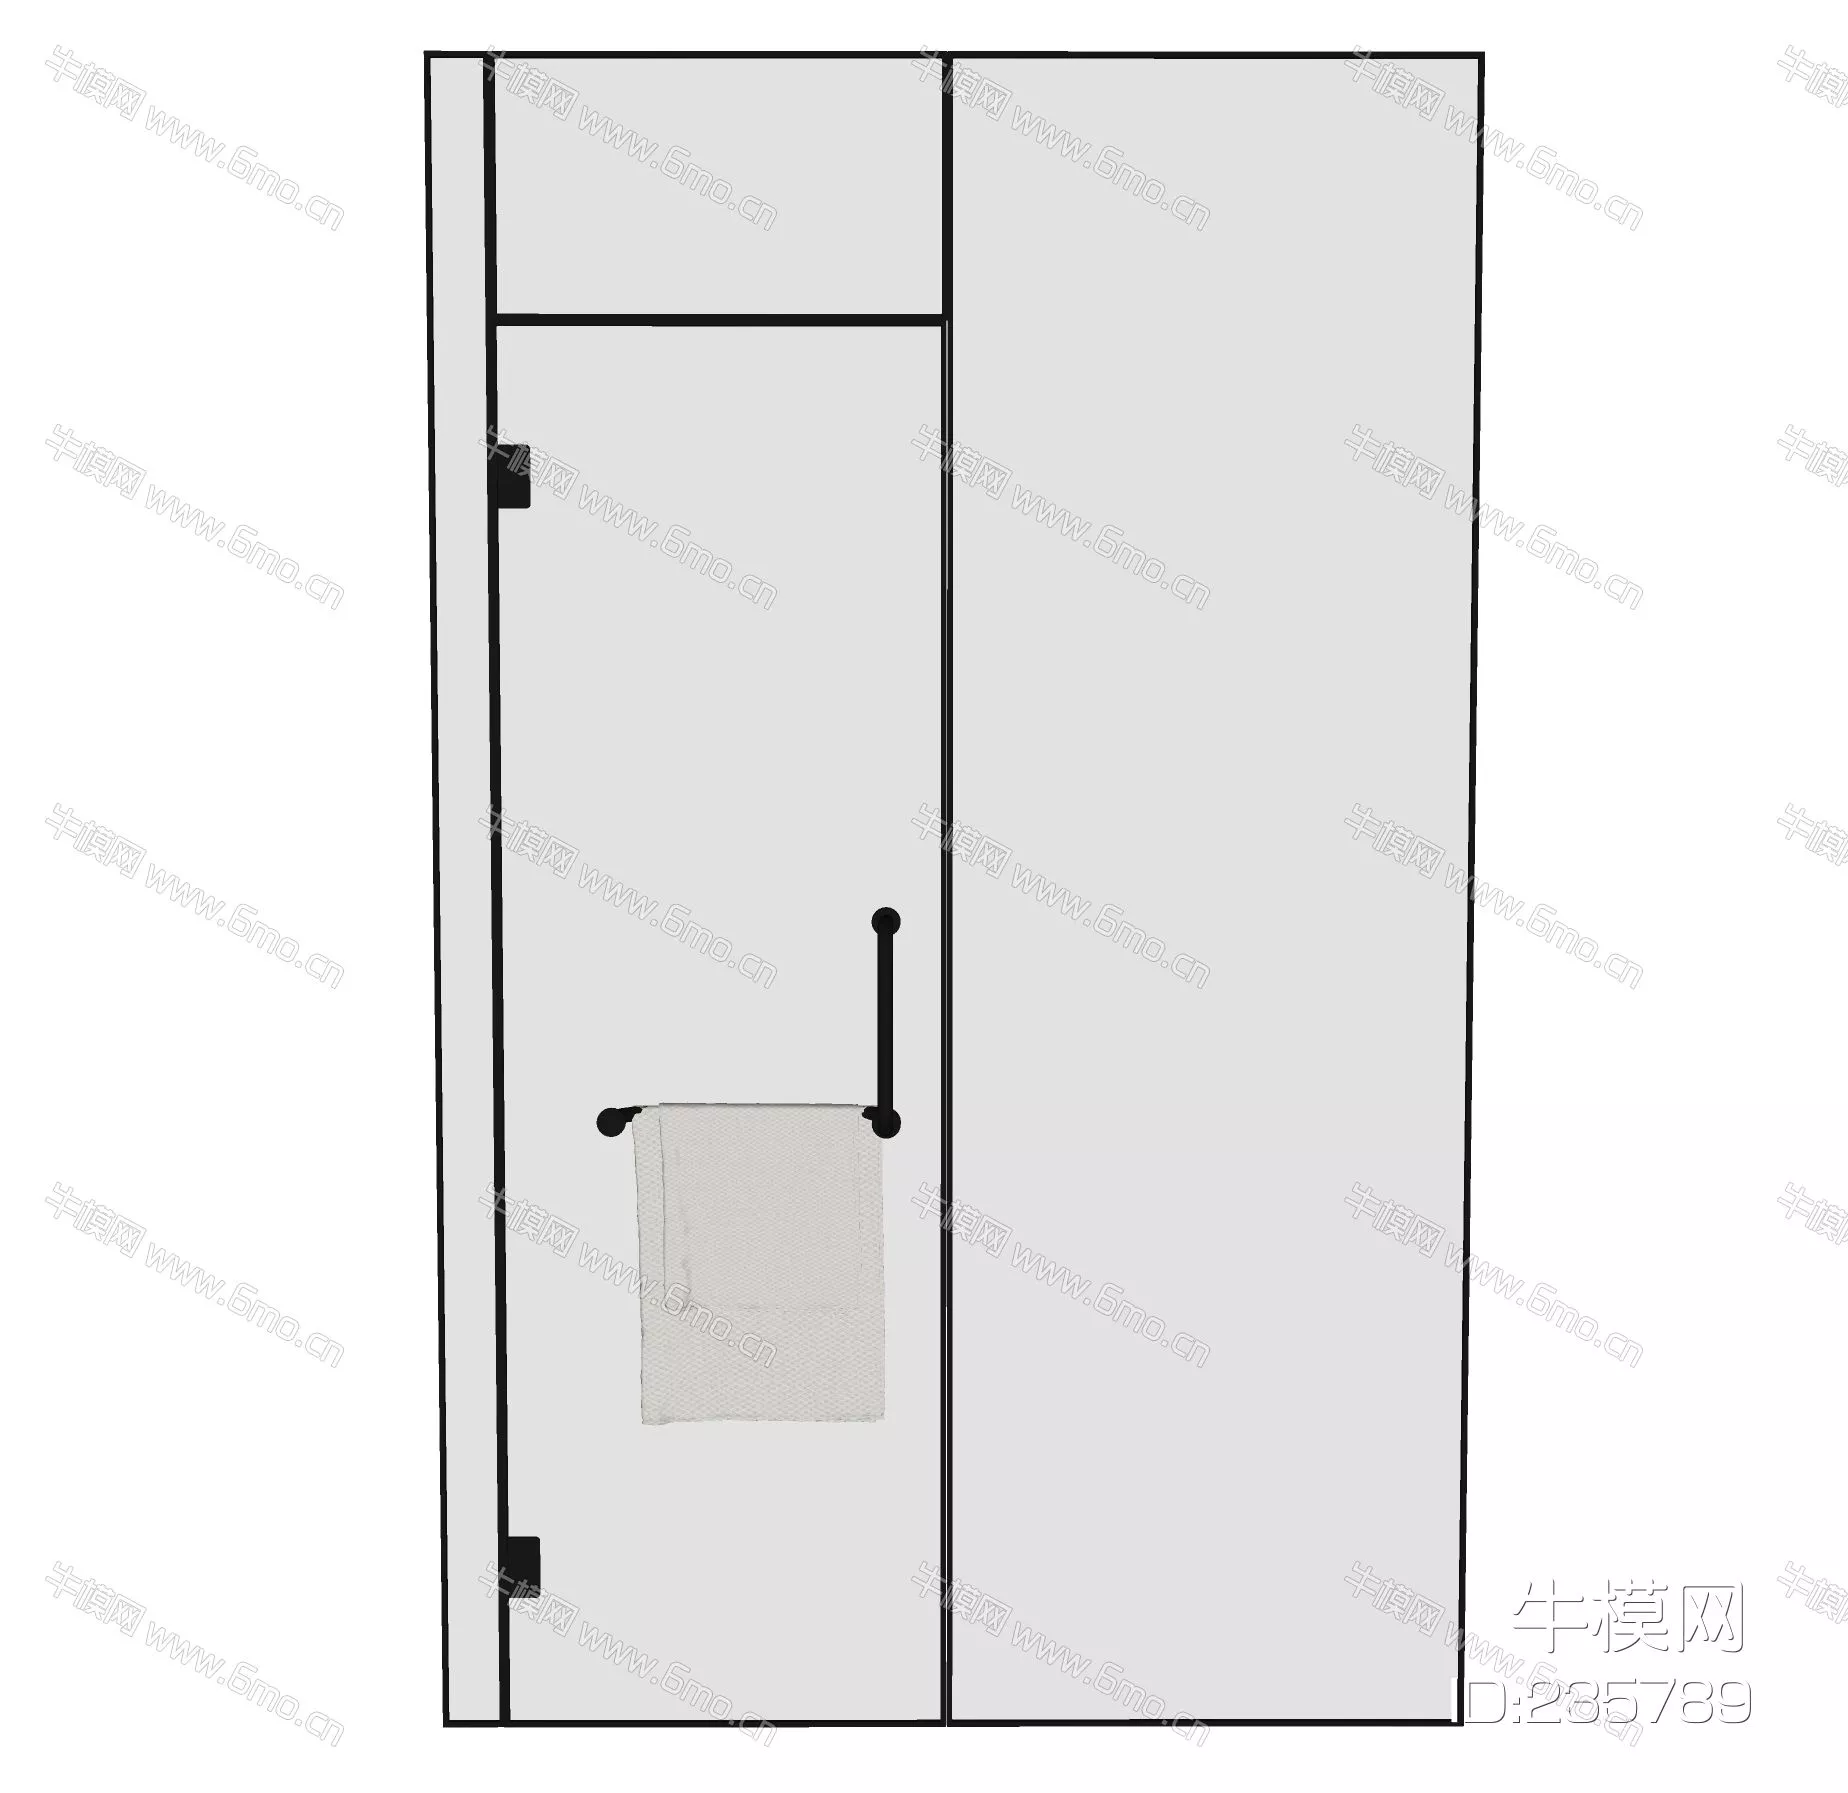 MODERN DOOR AND WINDOWS - SKETCHUP 3D MODEL - ENSCAPE - 235789